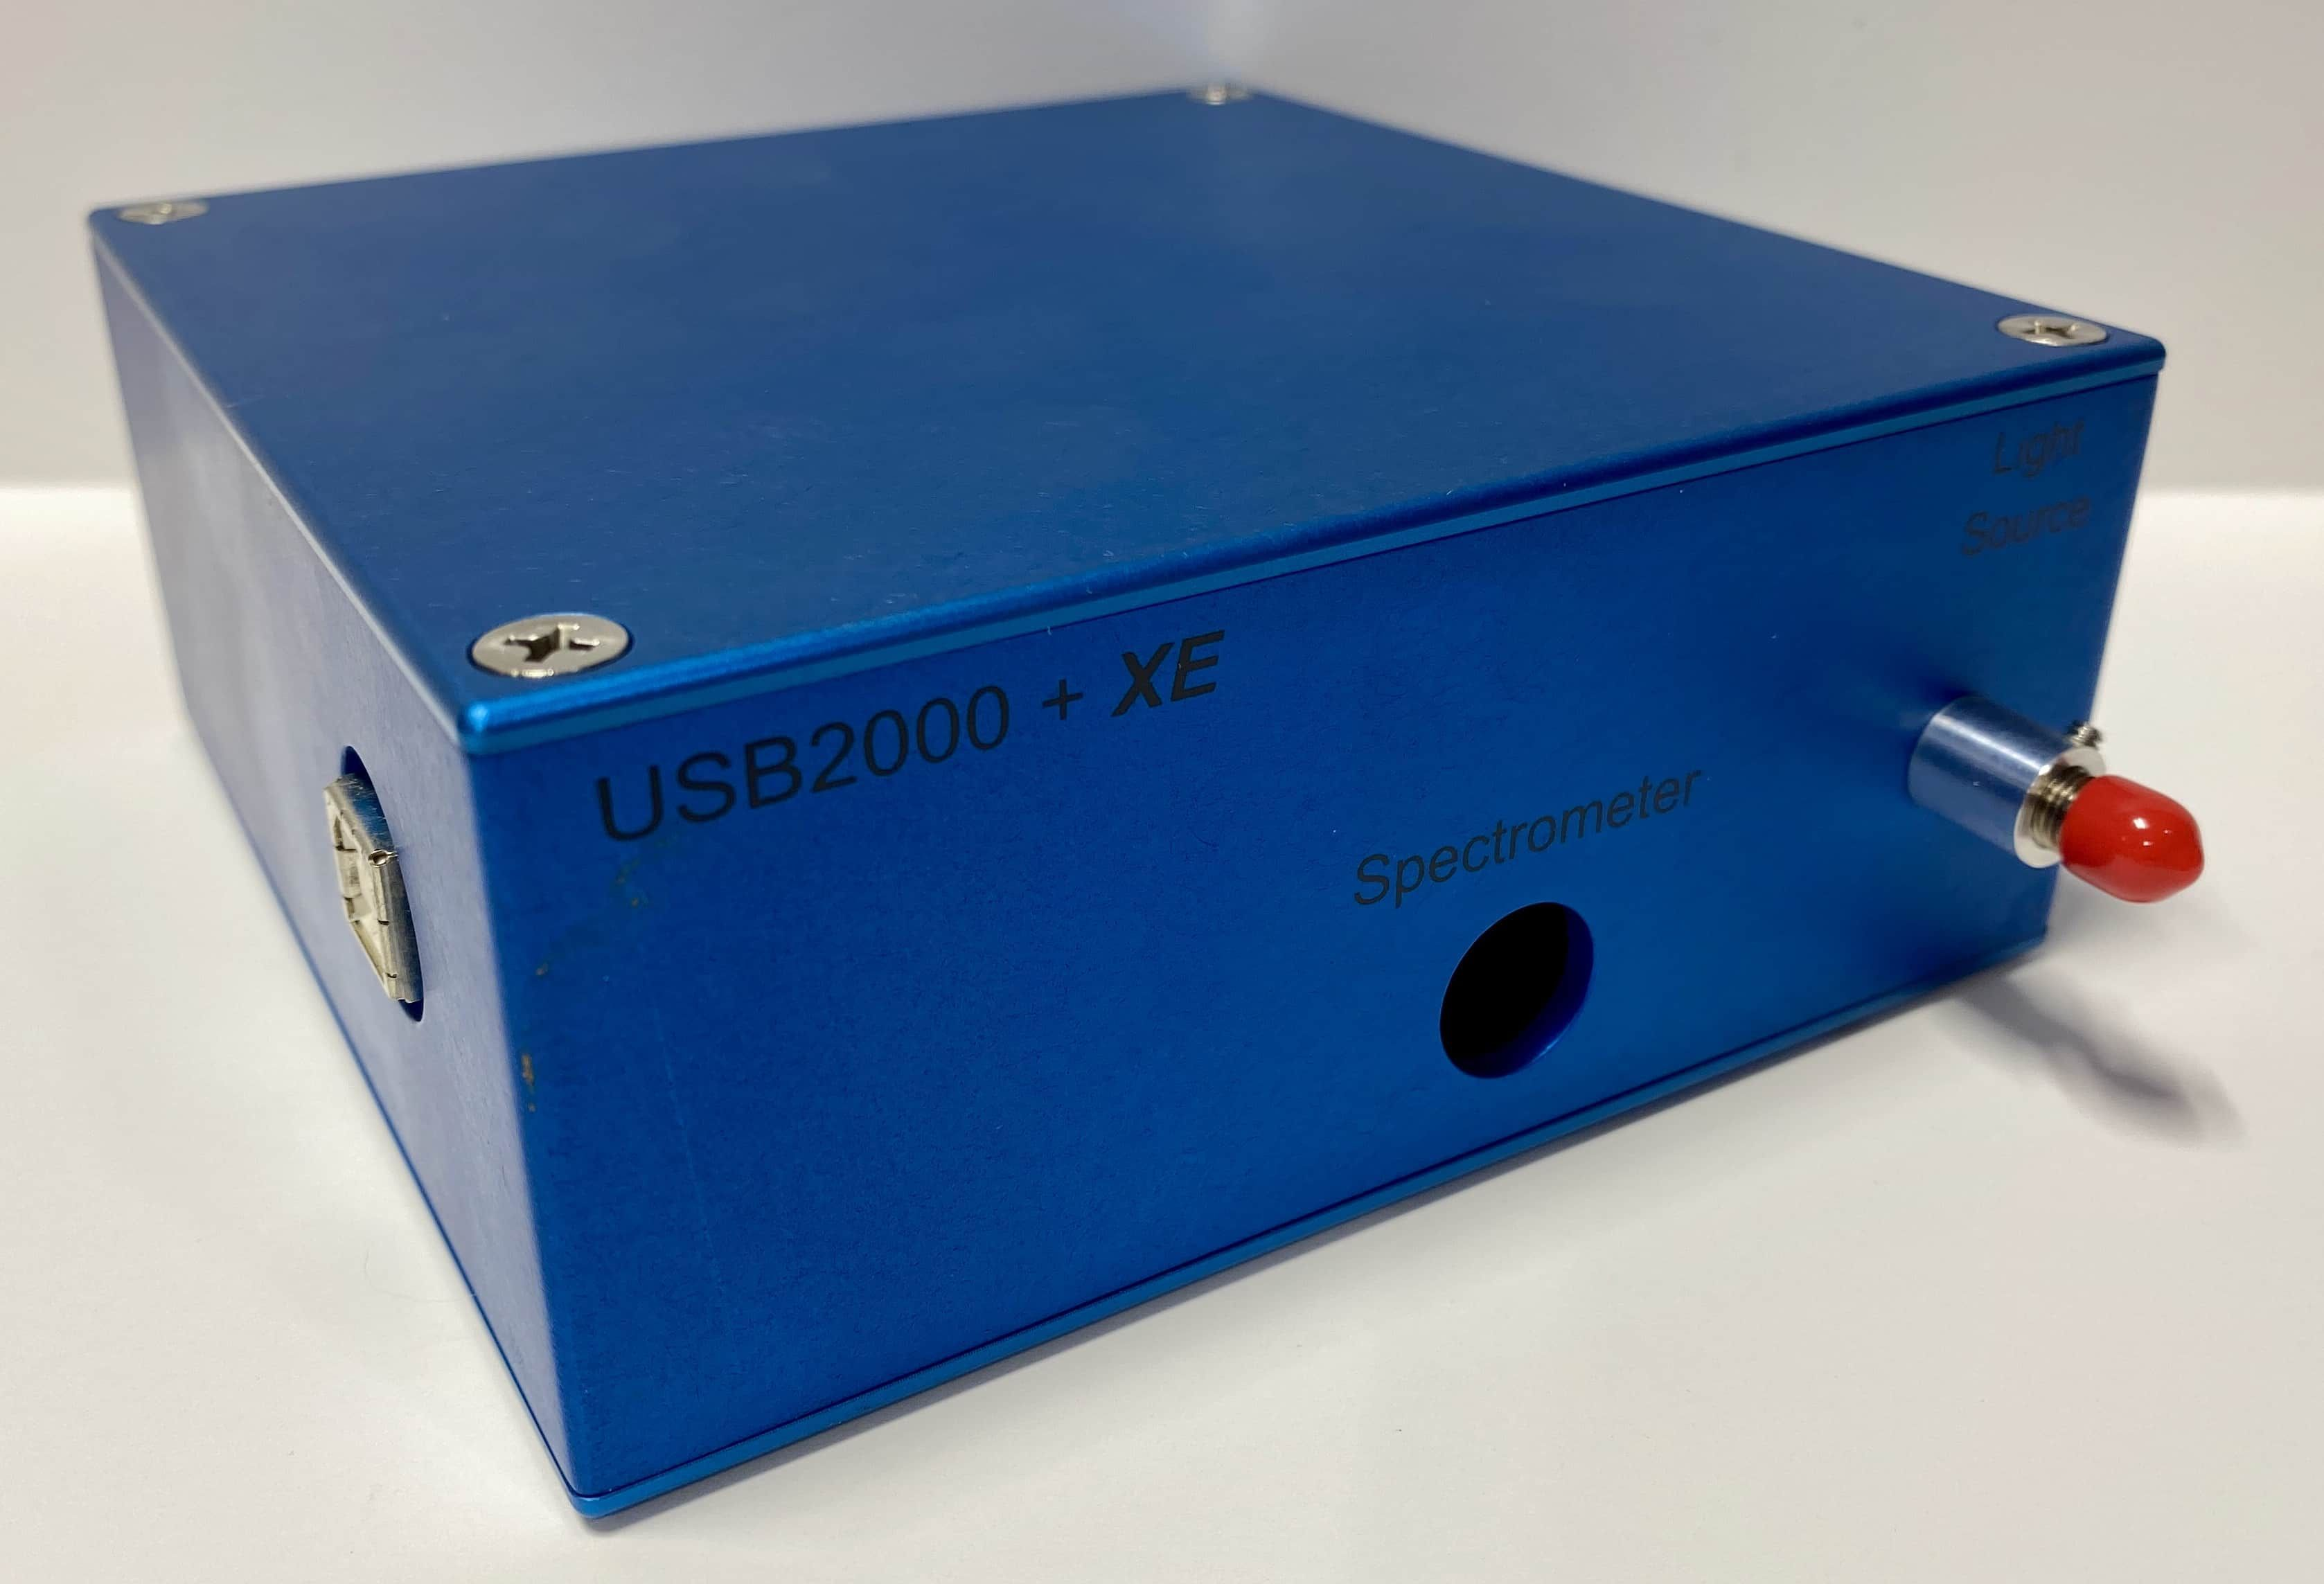 USB2000+XE Spectrophotometer - Lamp Module